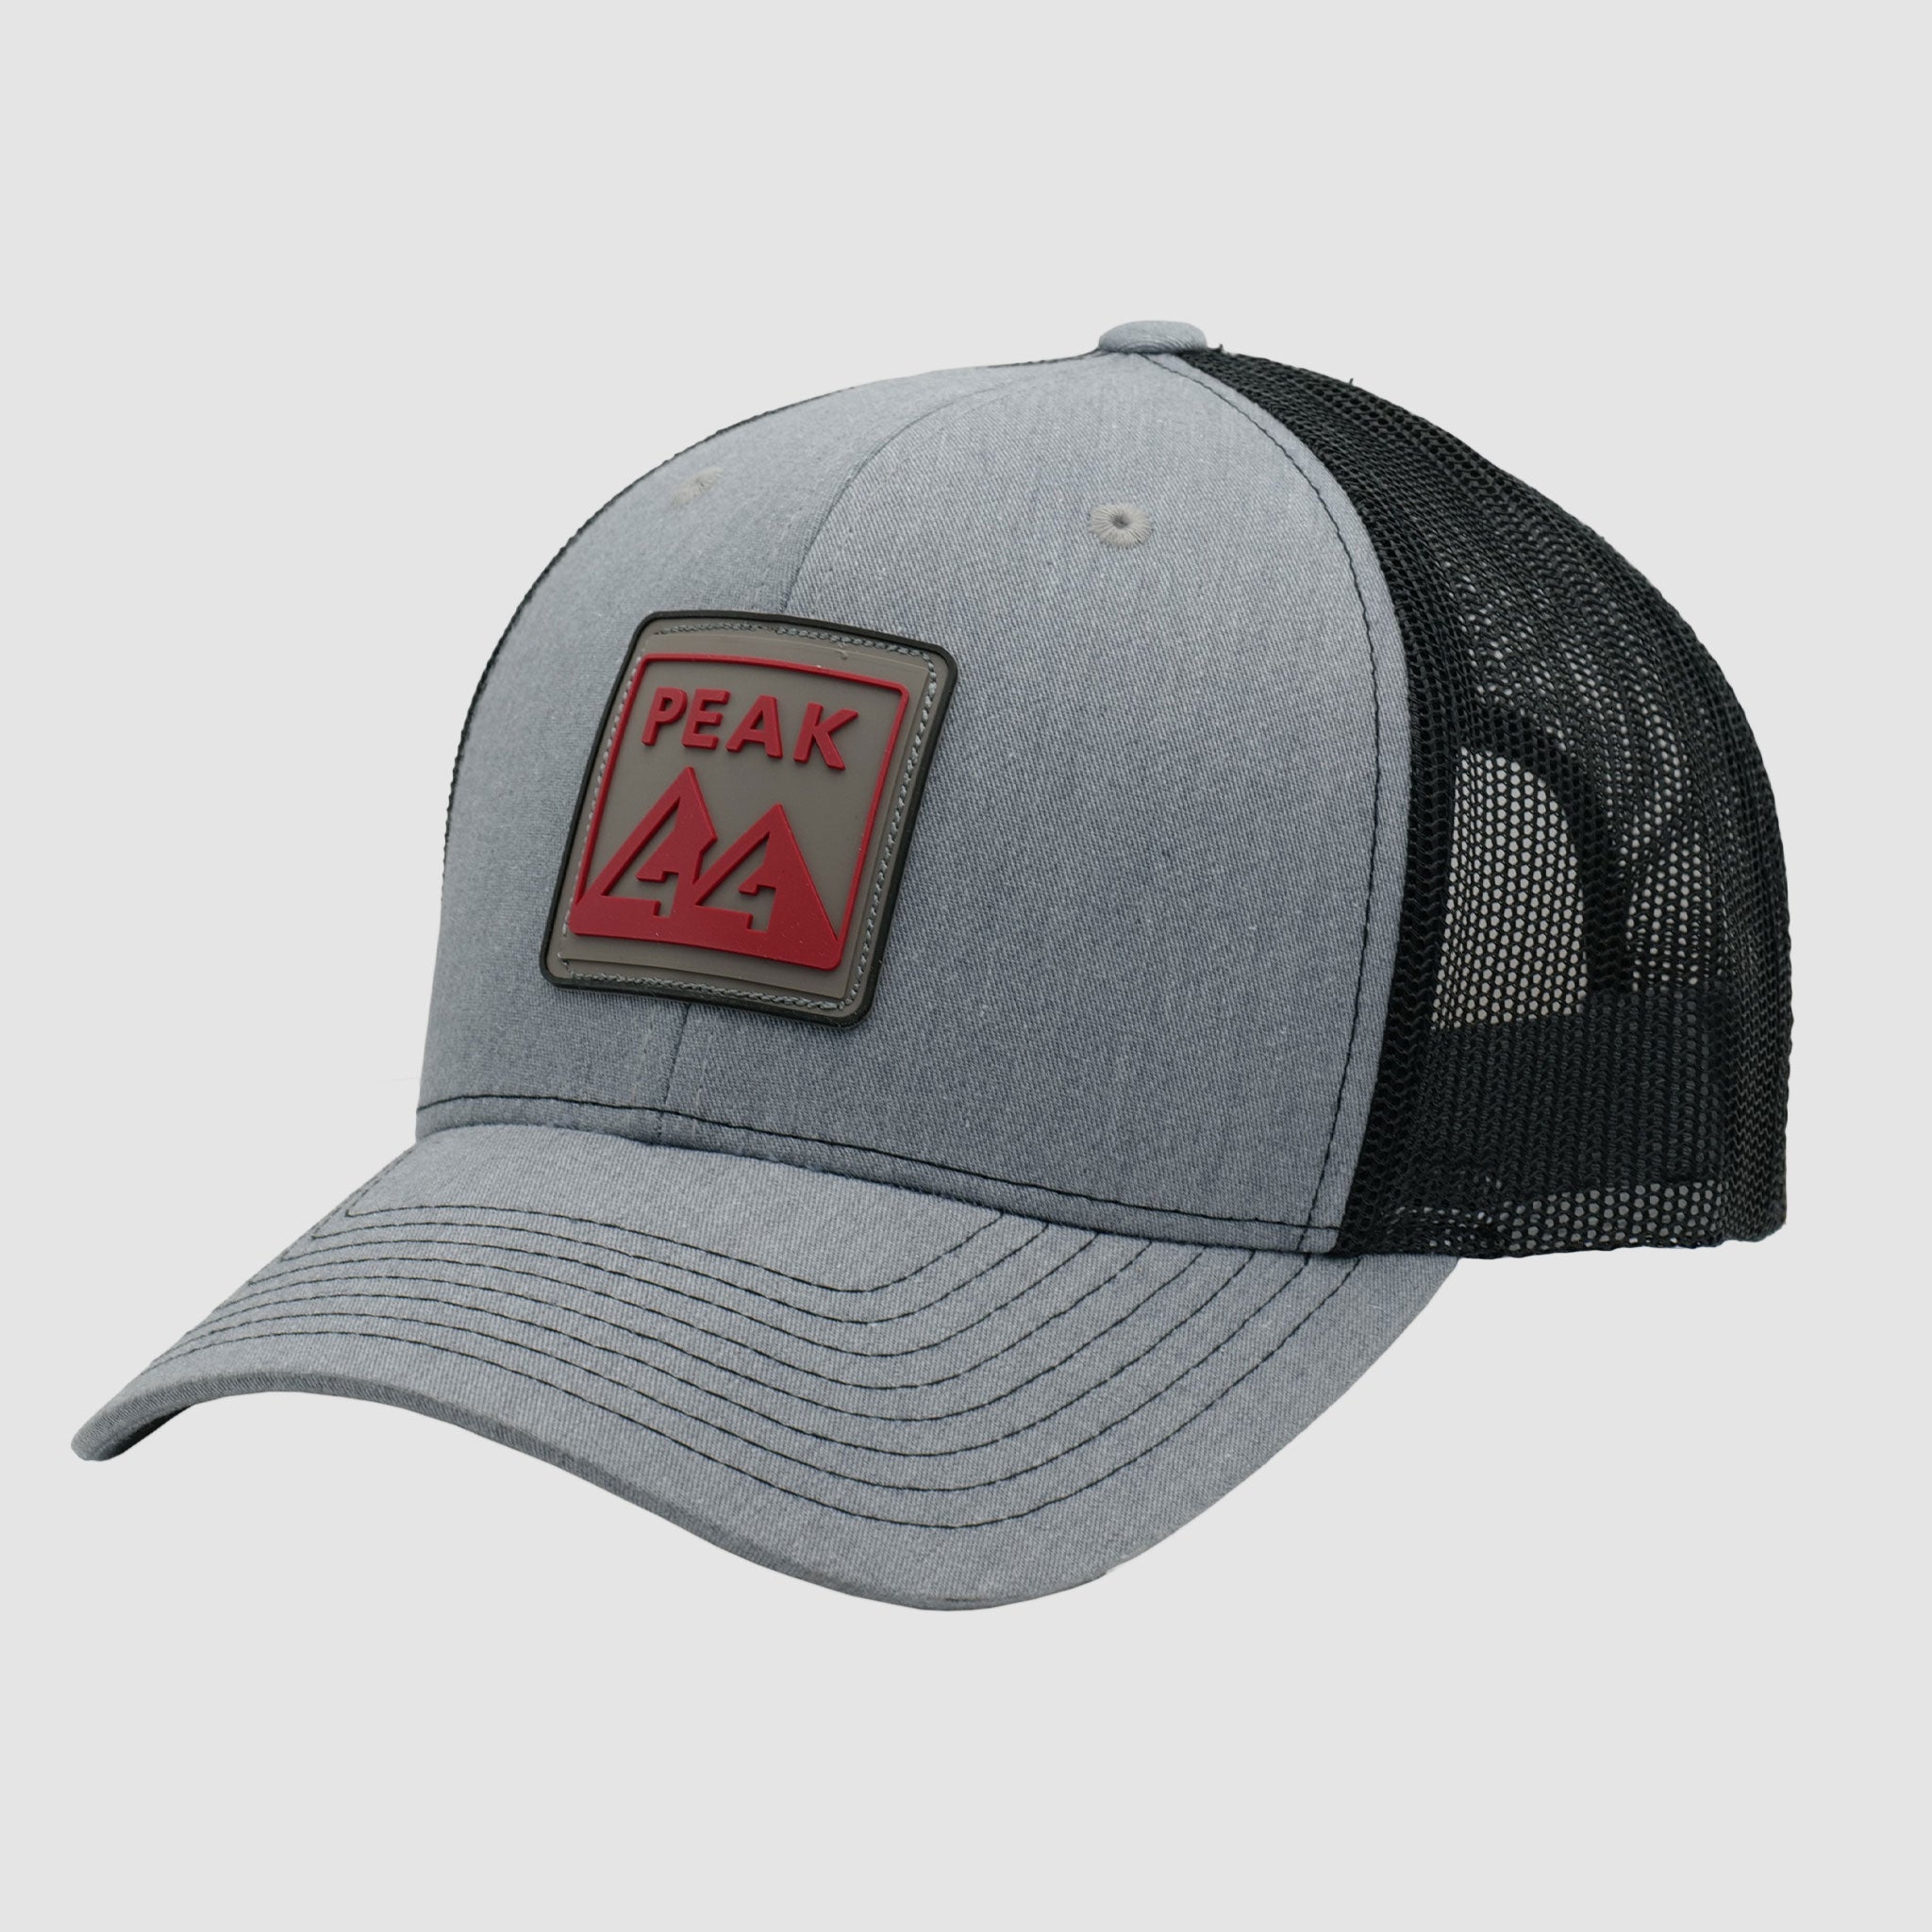 Peak 44 Gray Hat